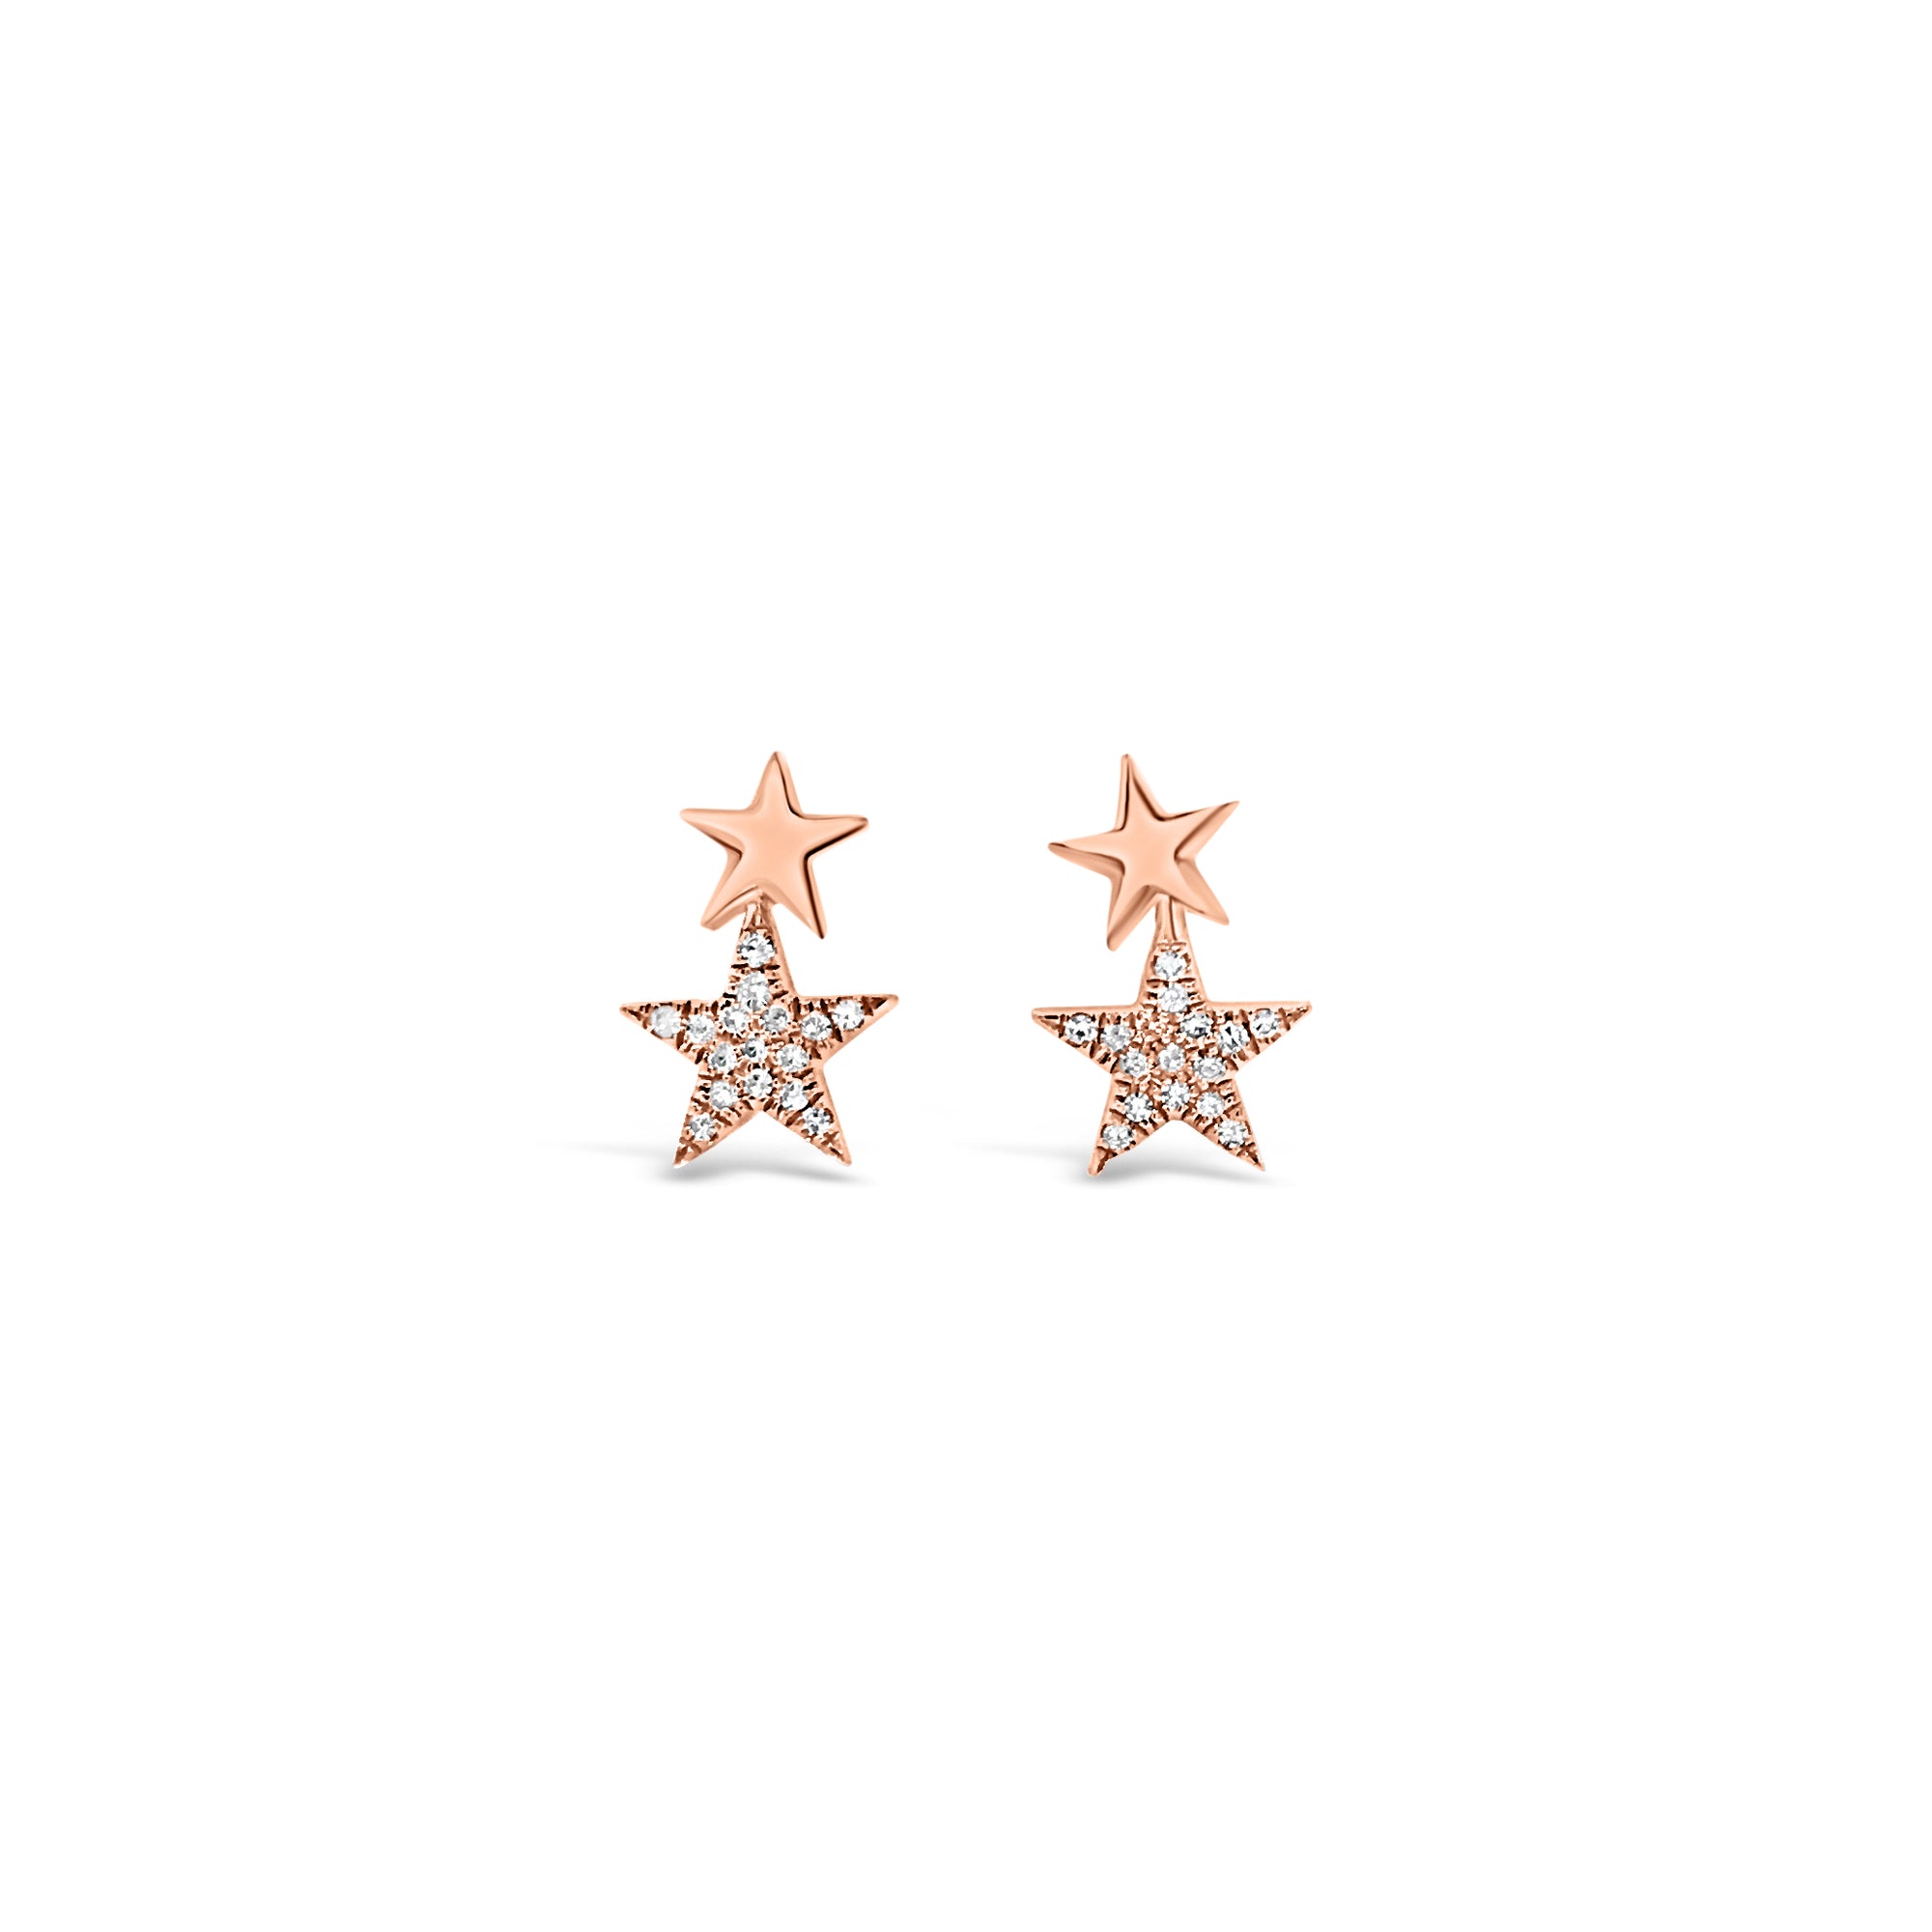 Diamond & Gold Star Crawler Earrings -14K white gold weighing 1.76 grams -32 round diamonds totaling 0.07 carats